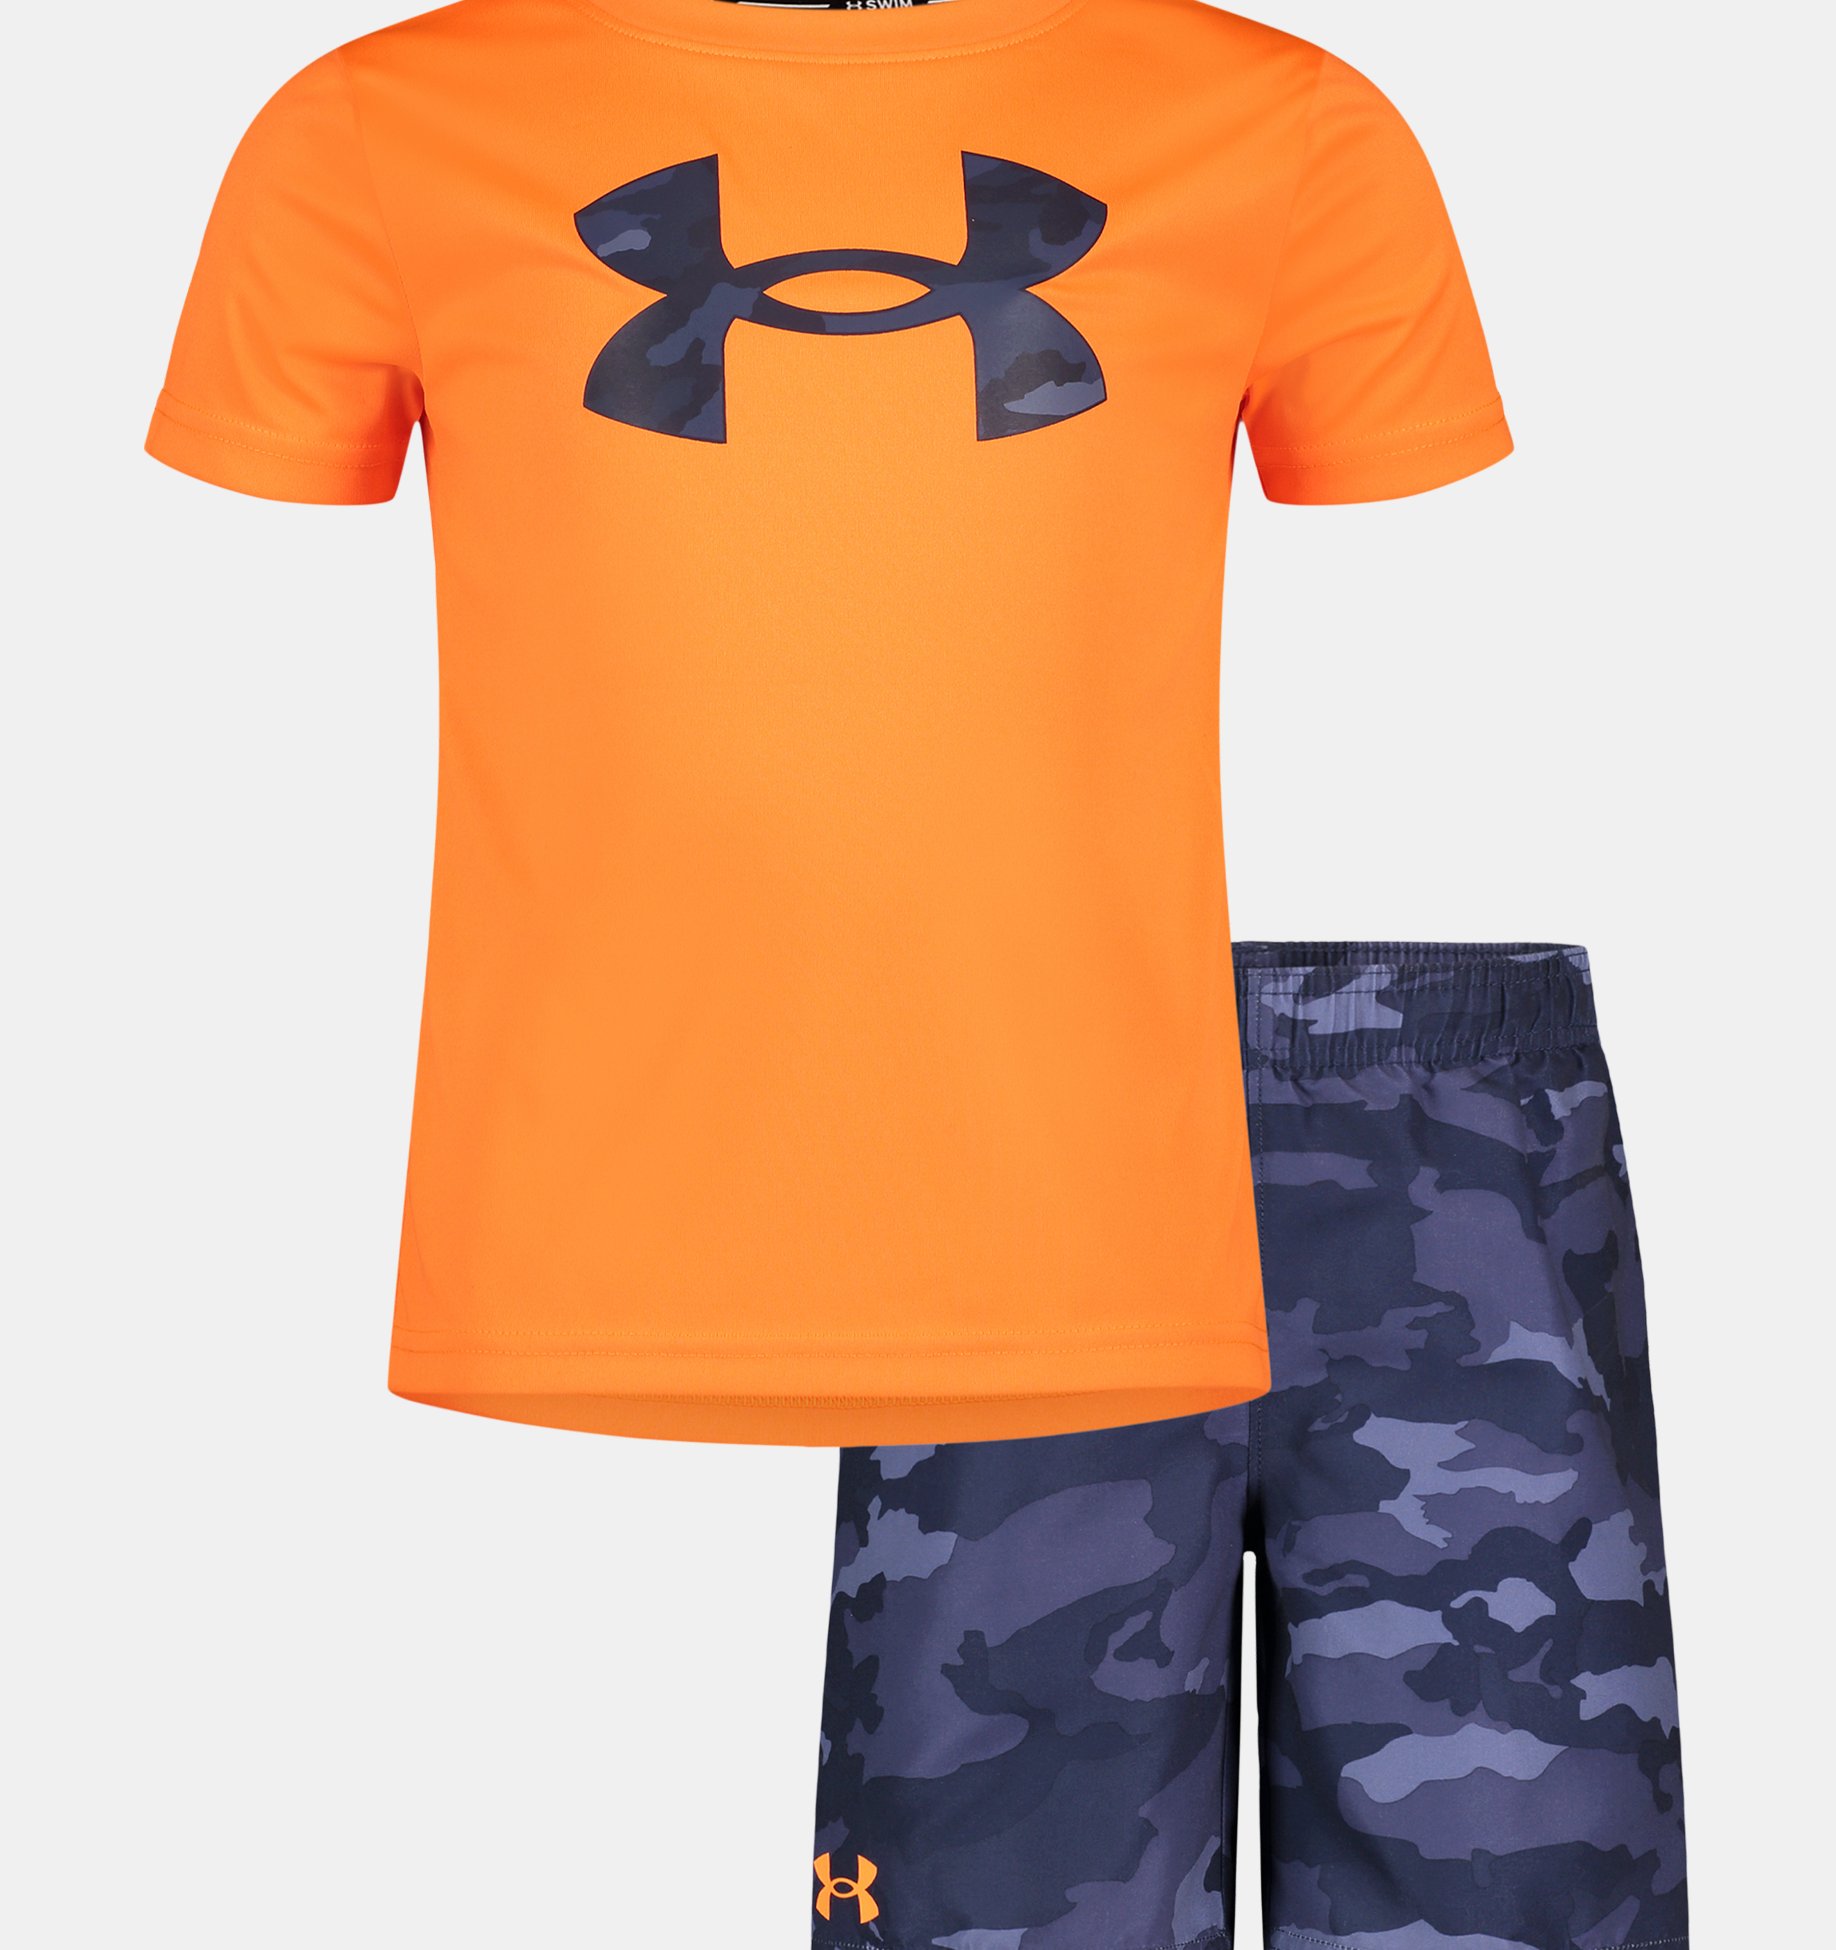 NEW Kids Youth Boys Under Armour UA heatgear Try Another Sport Orange Tee Shirt 